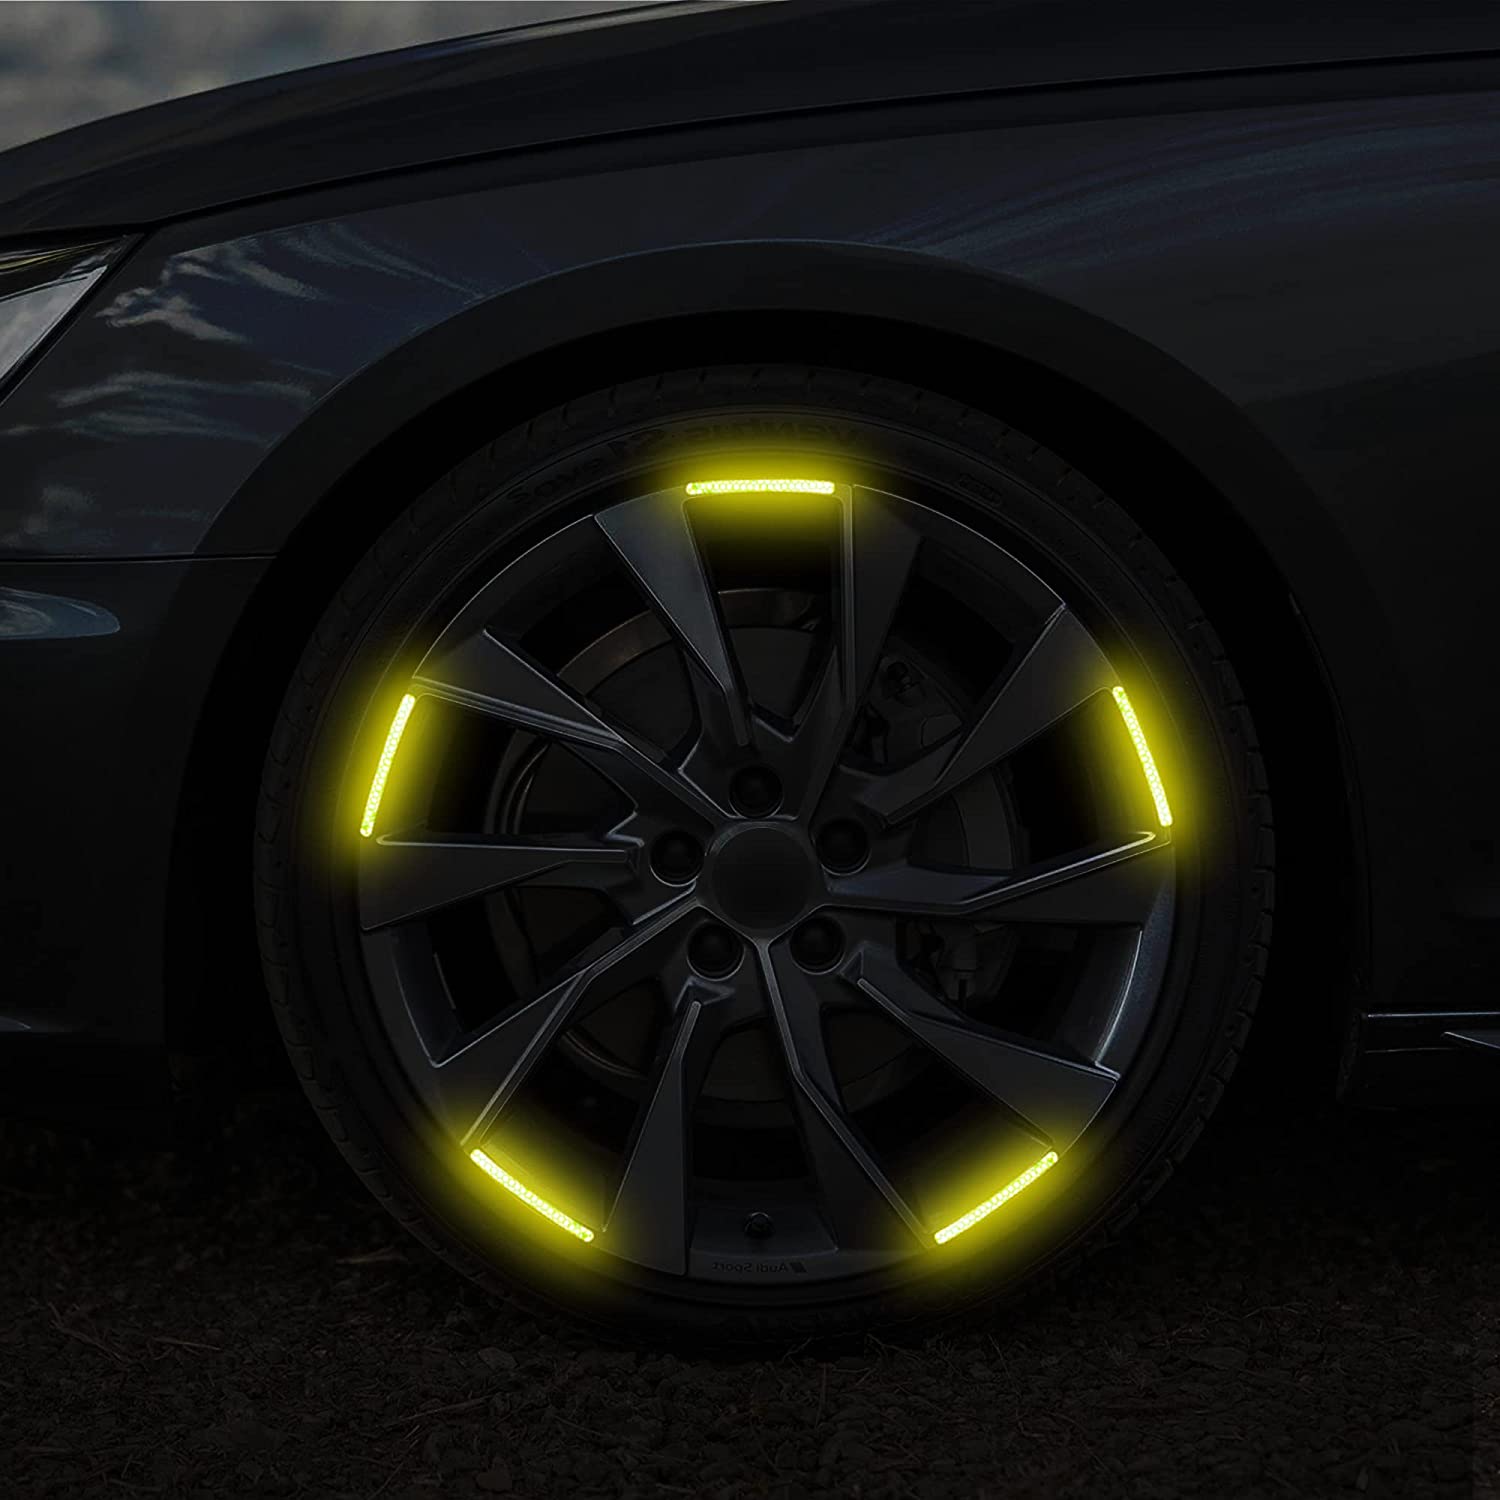 Night Safety Reflective Stripe Car Wheel Rim Universal Reflective Stickers